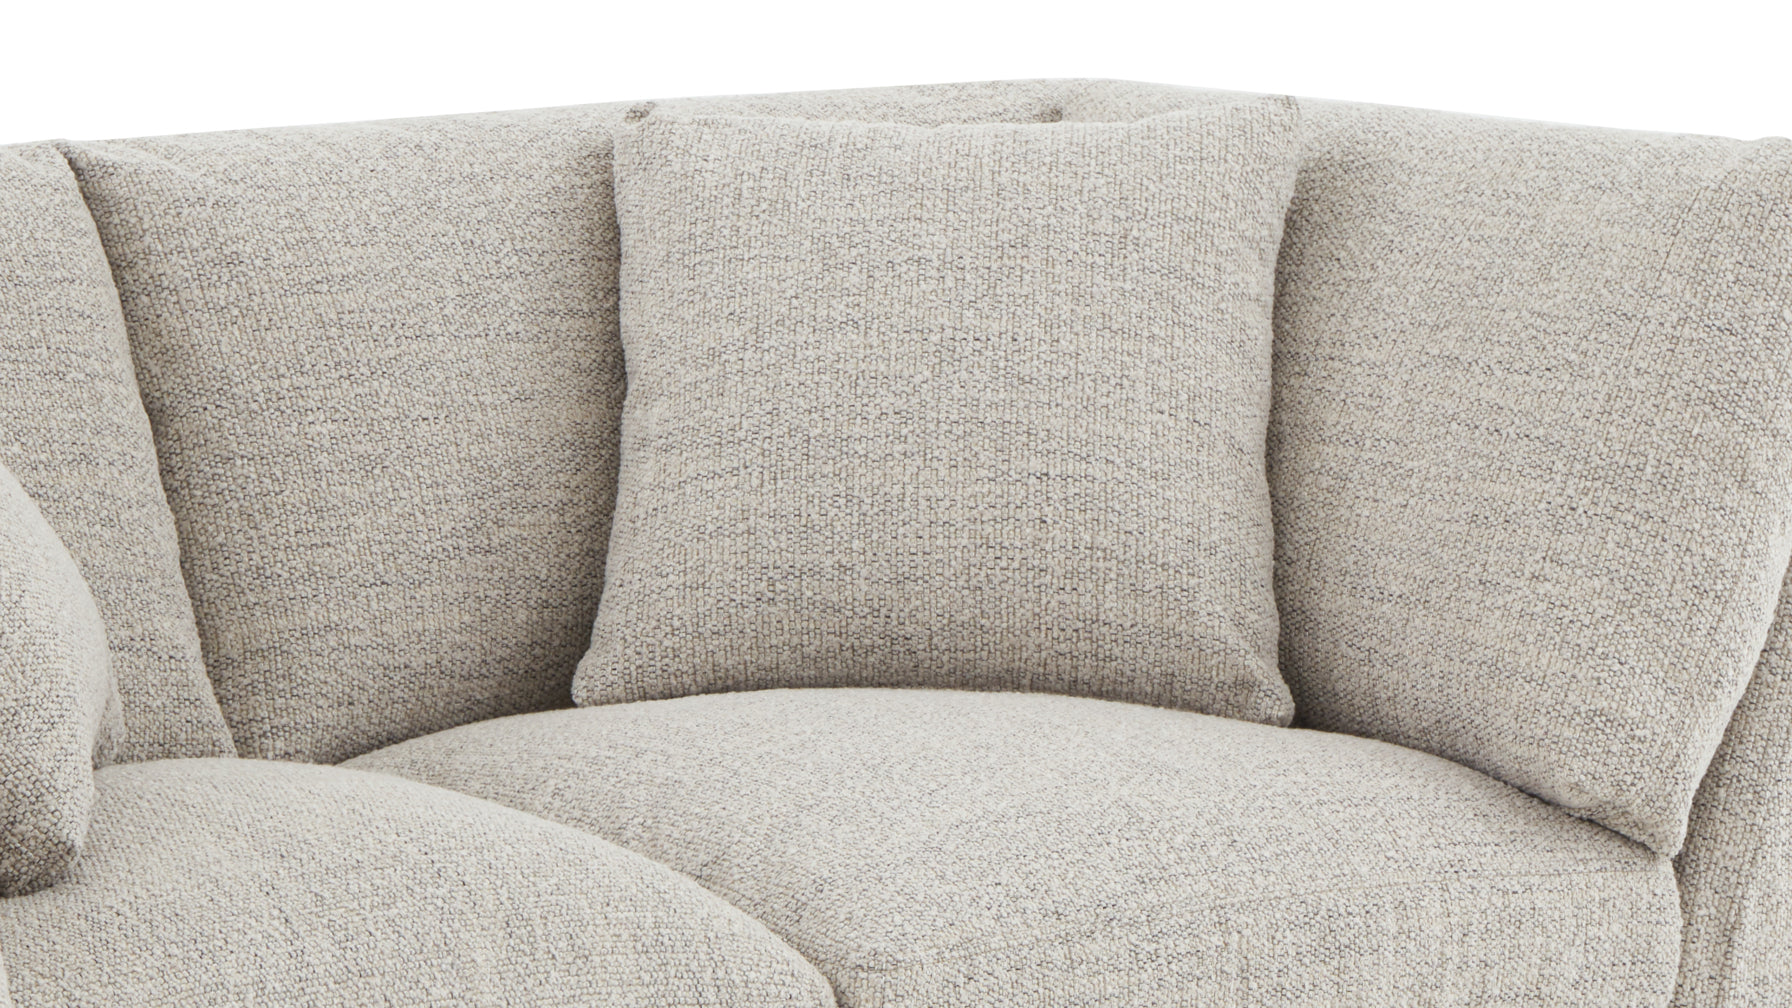 Get Together™ 3-Piece Modular Sofa, Standard, Oatmeal - Image 9